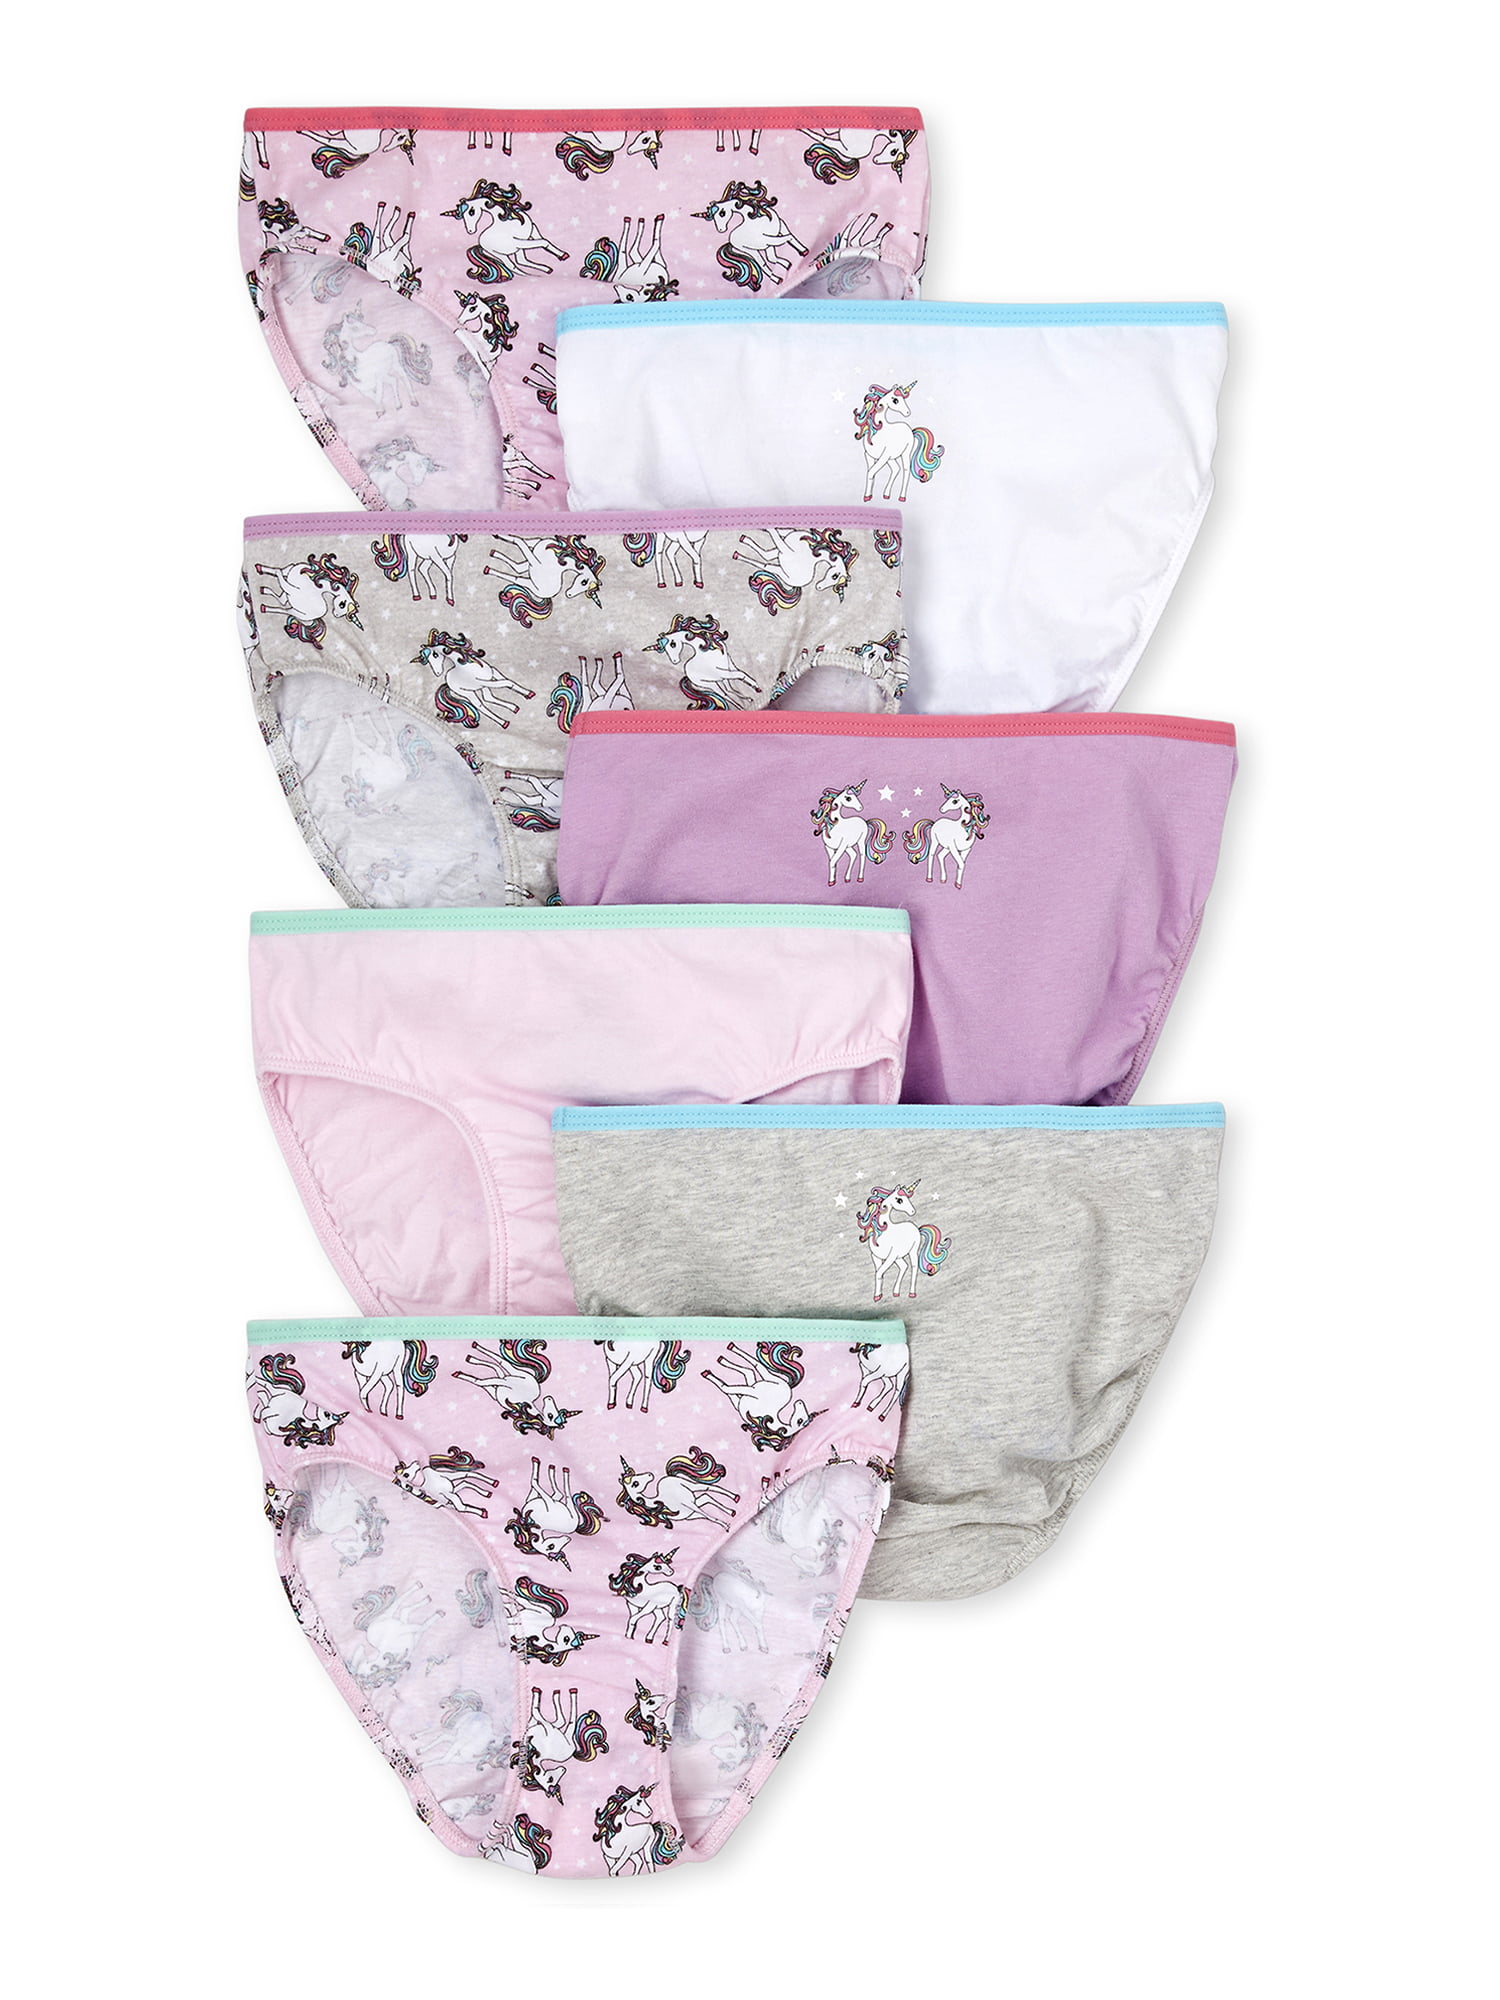 The Childrens Place Girls Underwear, 7 Pack Unicorn Panties Sizes